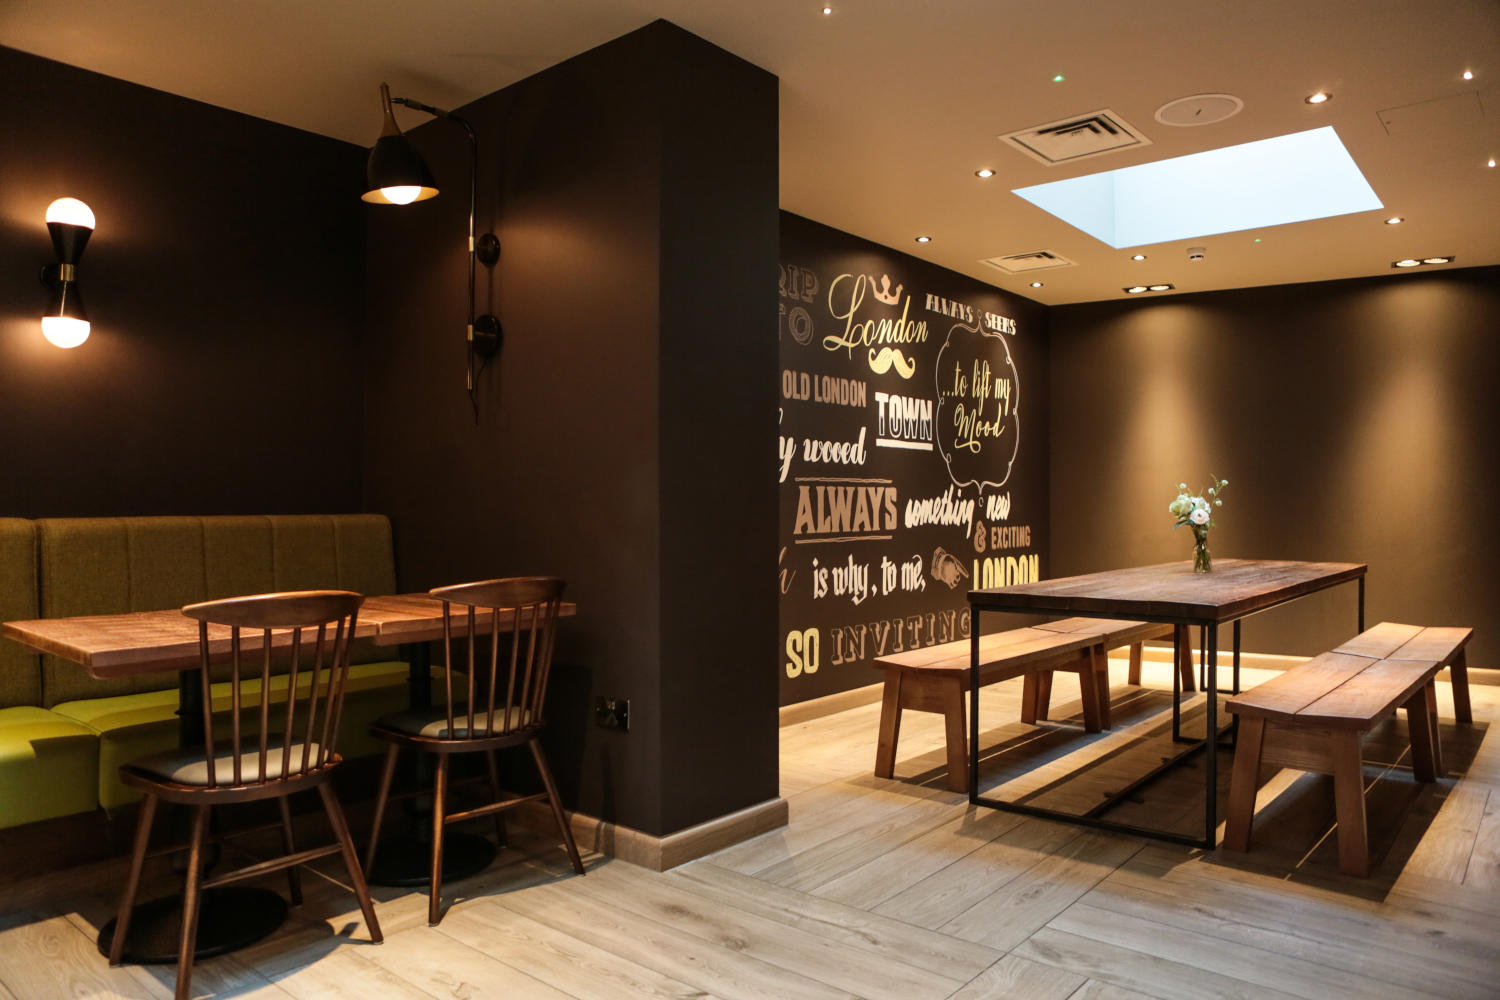 Images hub by Premier Inn London Spitalfields, Brick Lane hotel